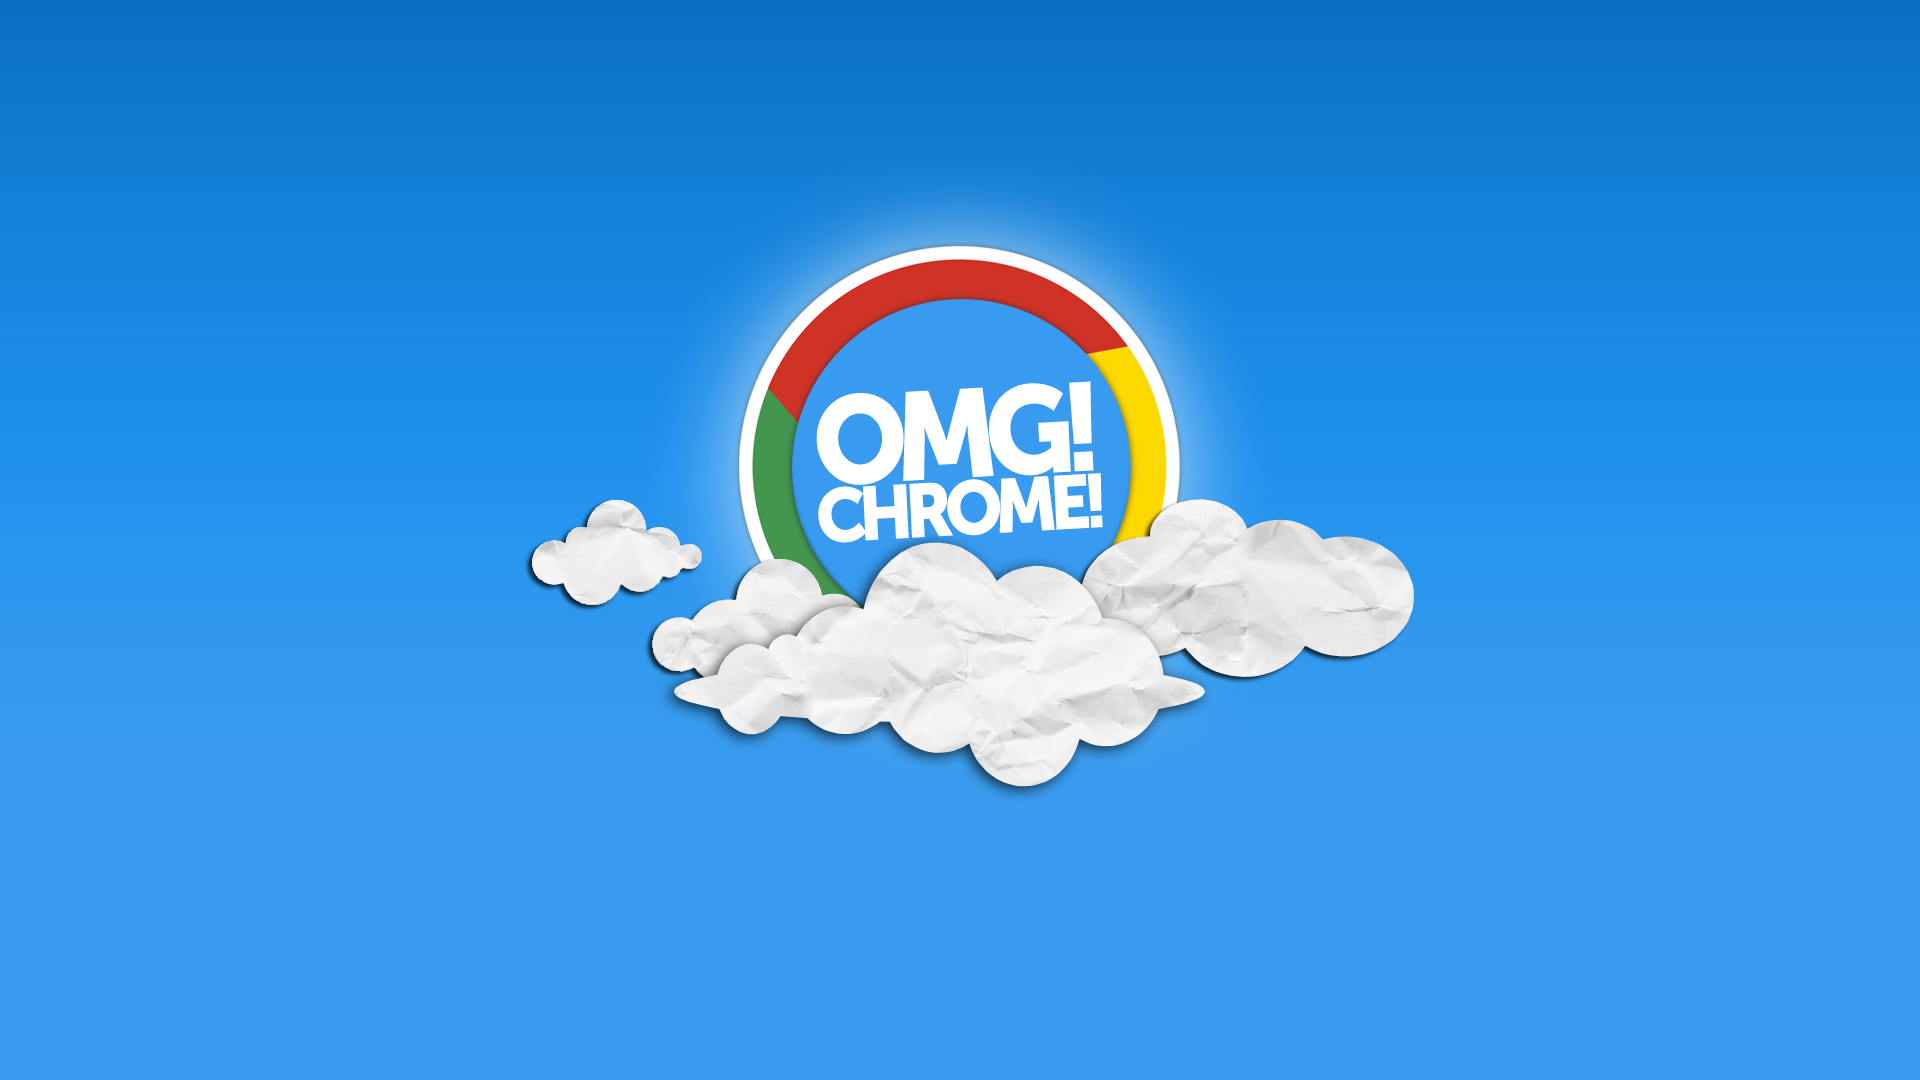 OMG! Chrome! Clouds Wallpaper by d0od on DeviantArt